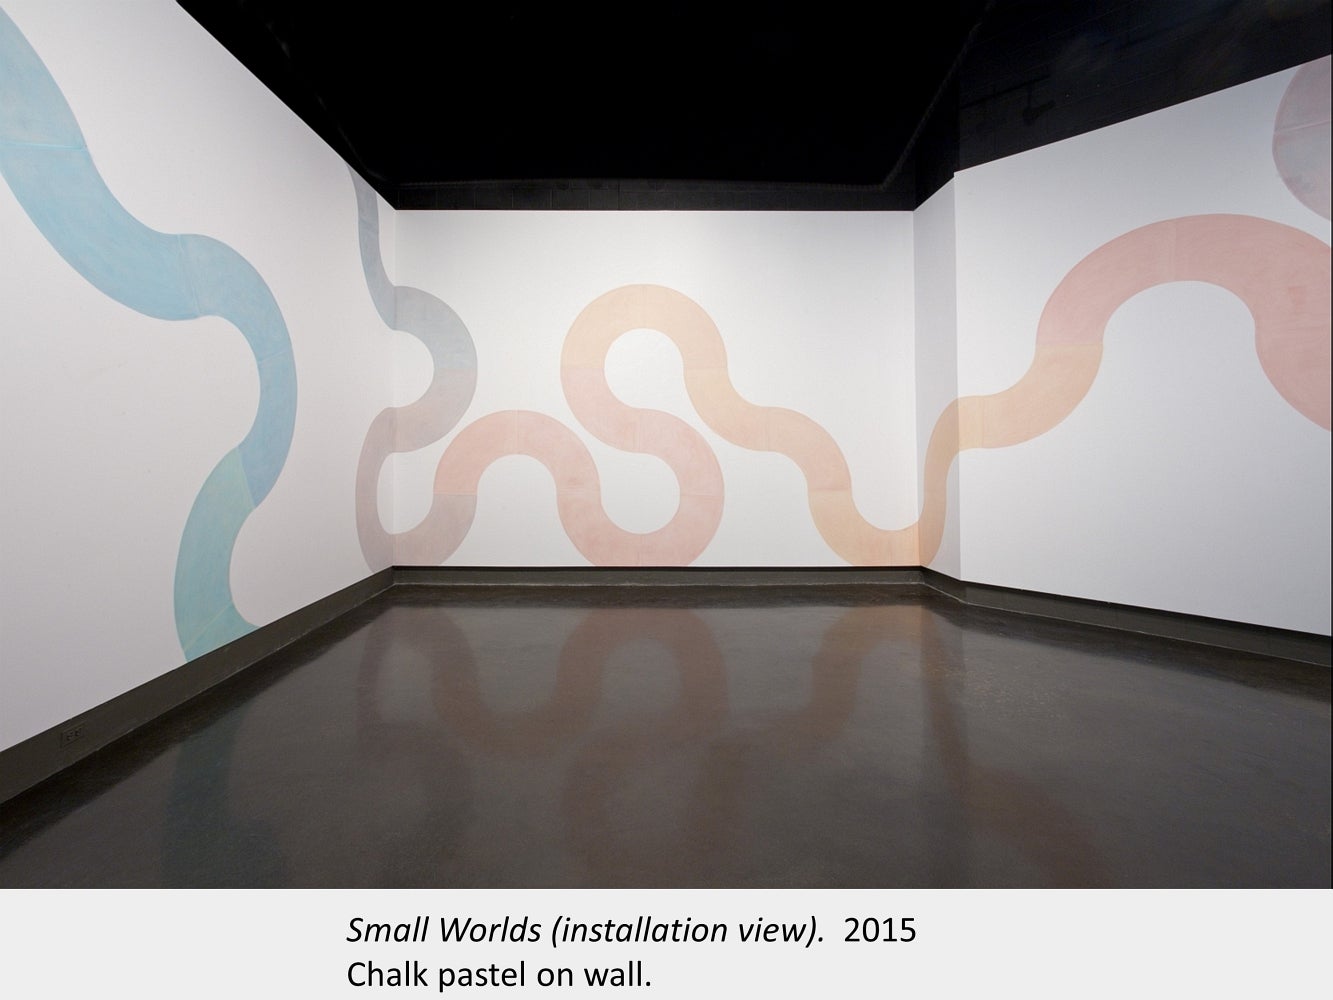 Artwork by Liz Little. Small Worlds (installation view). 2015. Chalk pastel on wall.